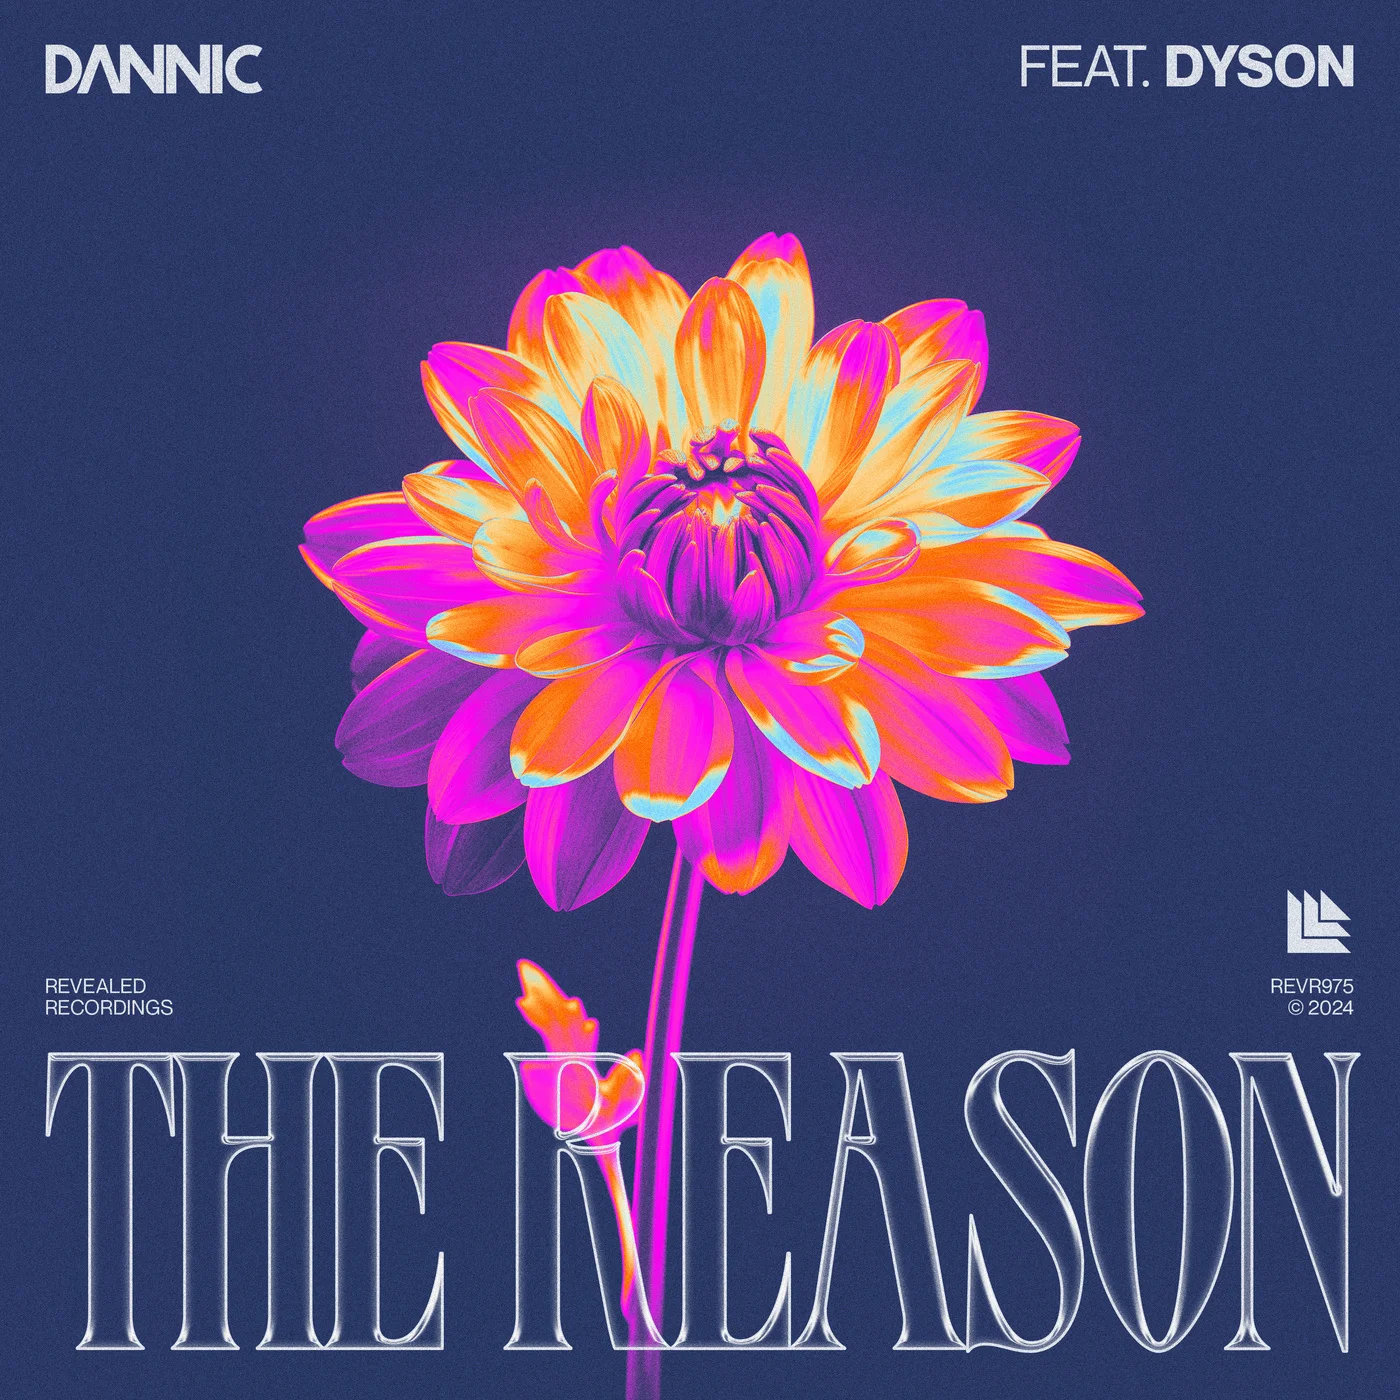 Dannic Feat. Dyson - The Reason